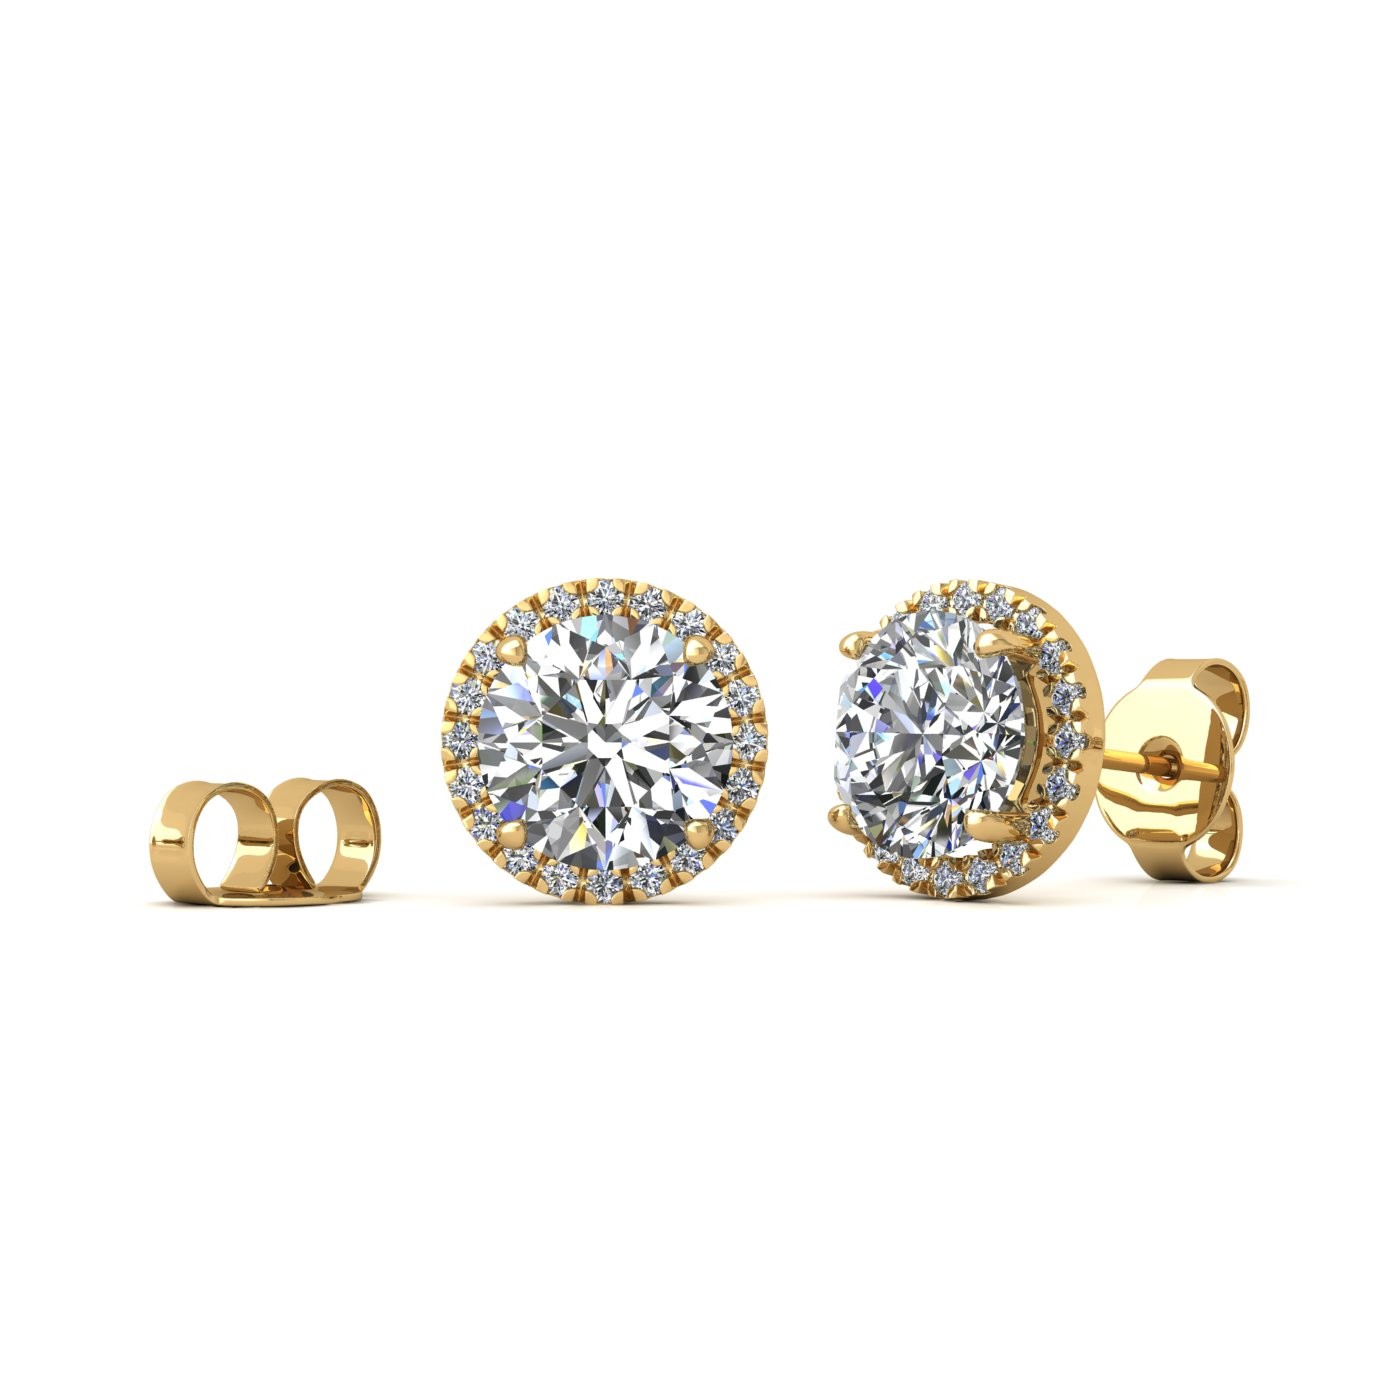 18k yellow gold  0,7 ct each (1,4 tcw) 4 prongs round shape diamond earrings with diamond pavÉ set halo